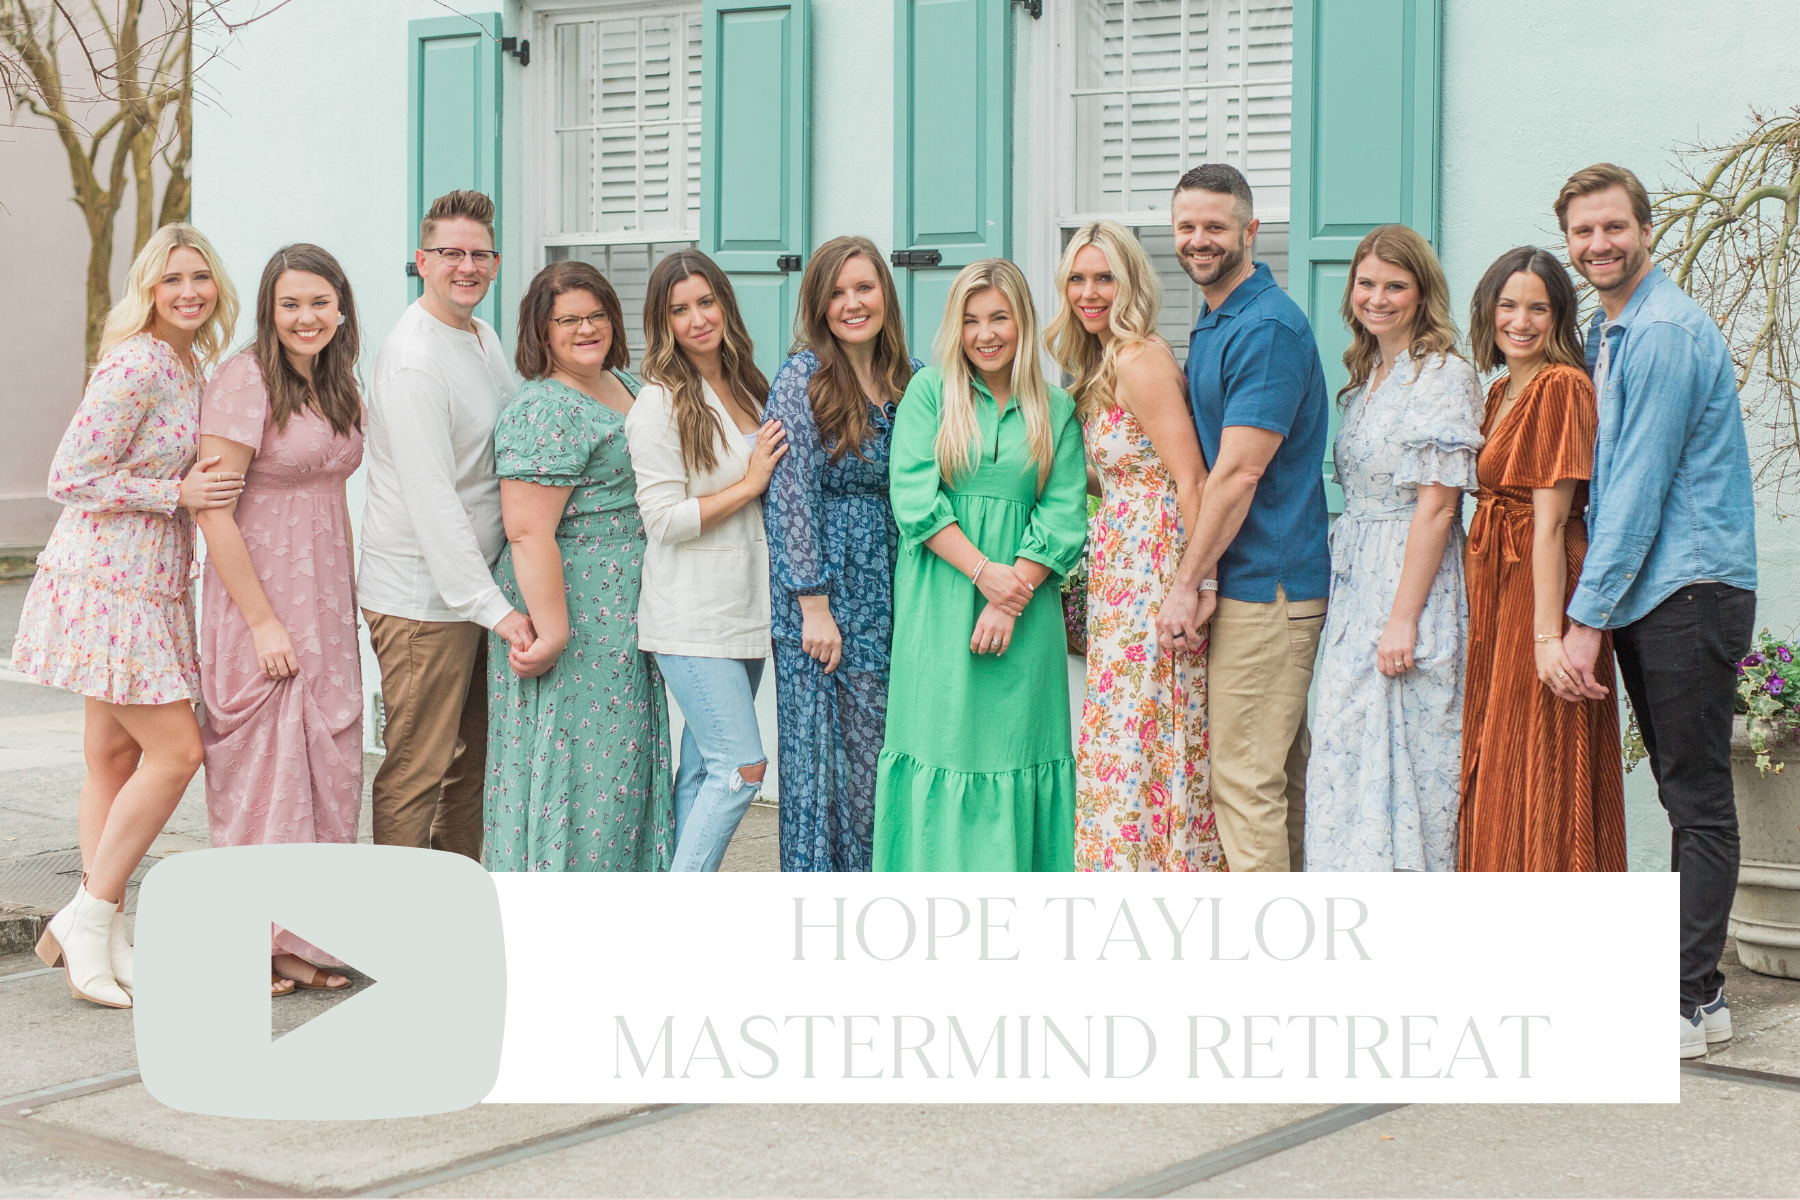 Hope Taylor Mastermind Retreat